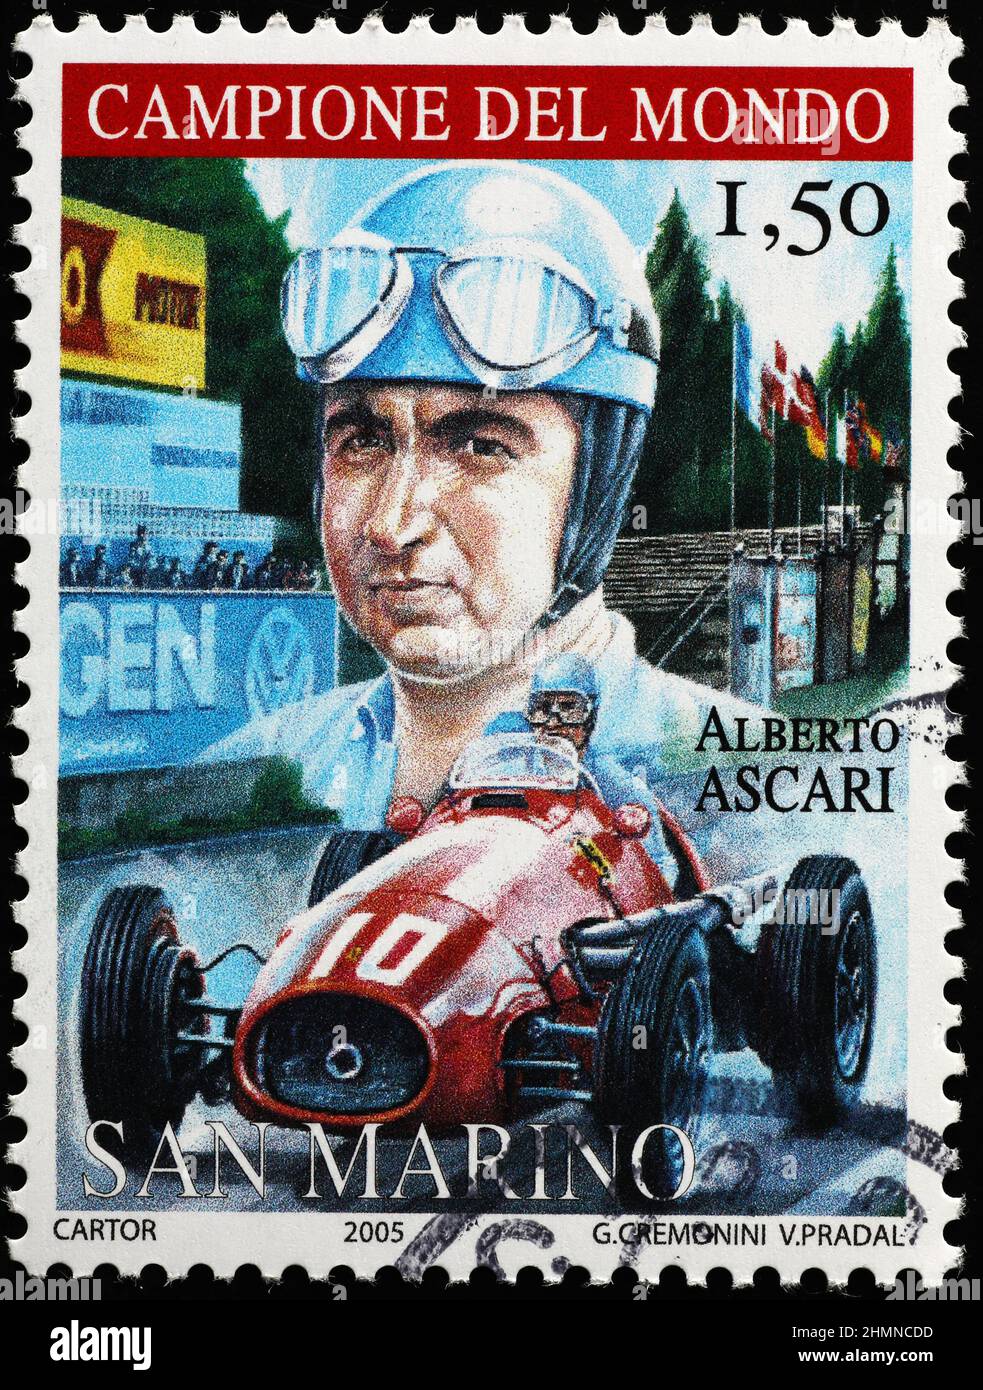 Alberto Ascari portrait on postage stamp of San Marino Stock Photo